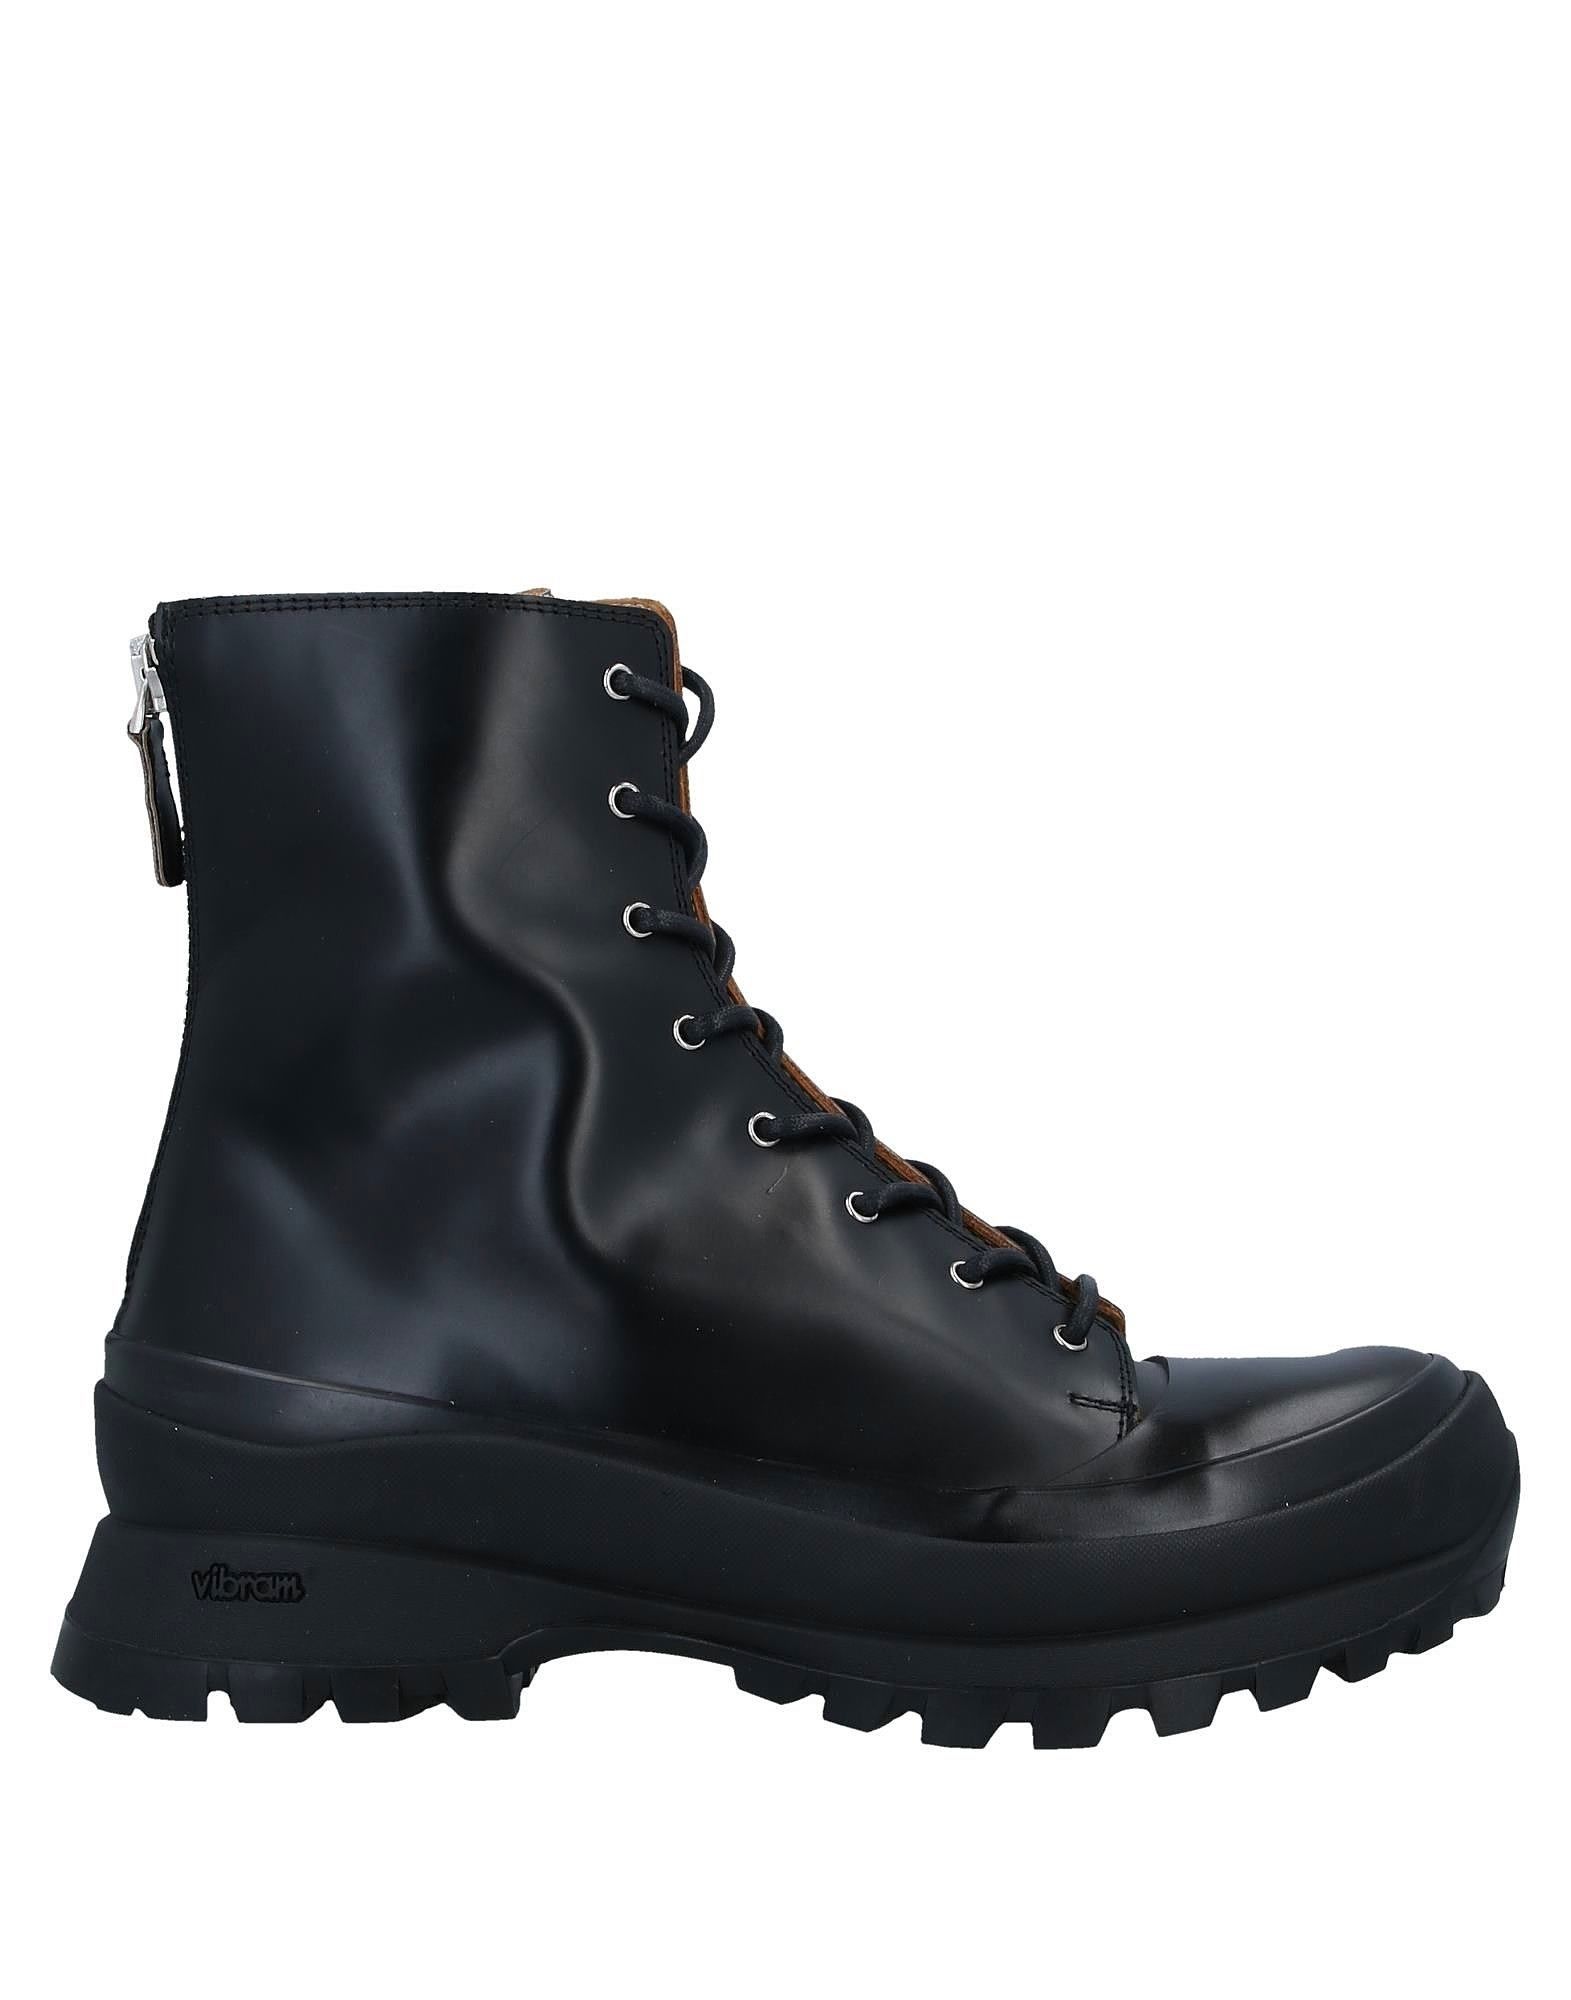 Jil Sander Boots in Black | Grailed